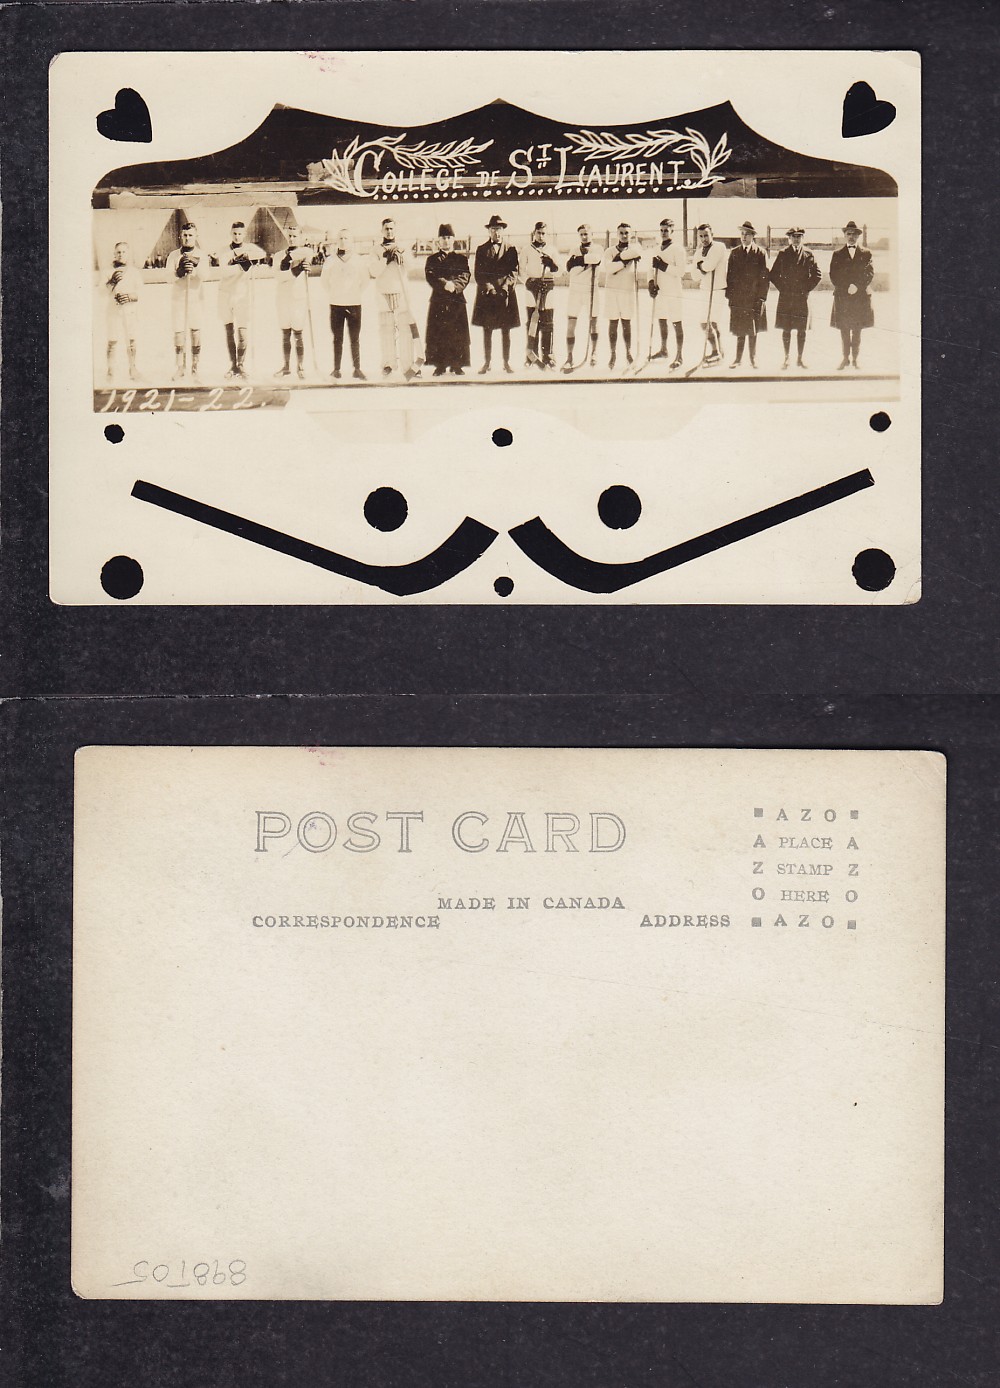 1921-22 MONTREAL HOCKEY TEAM POST CARD photo